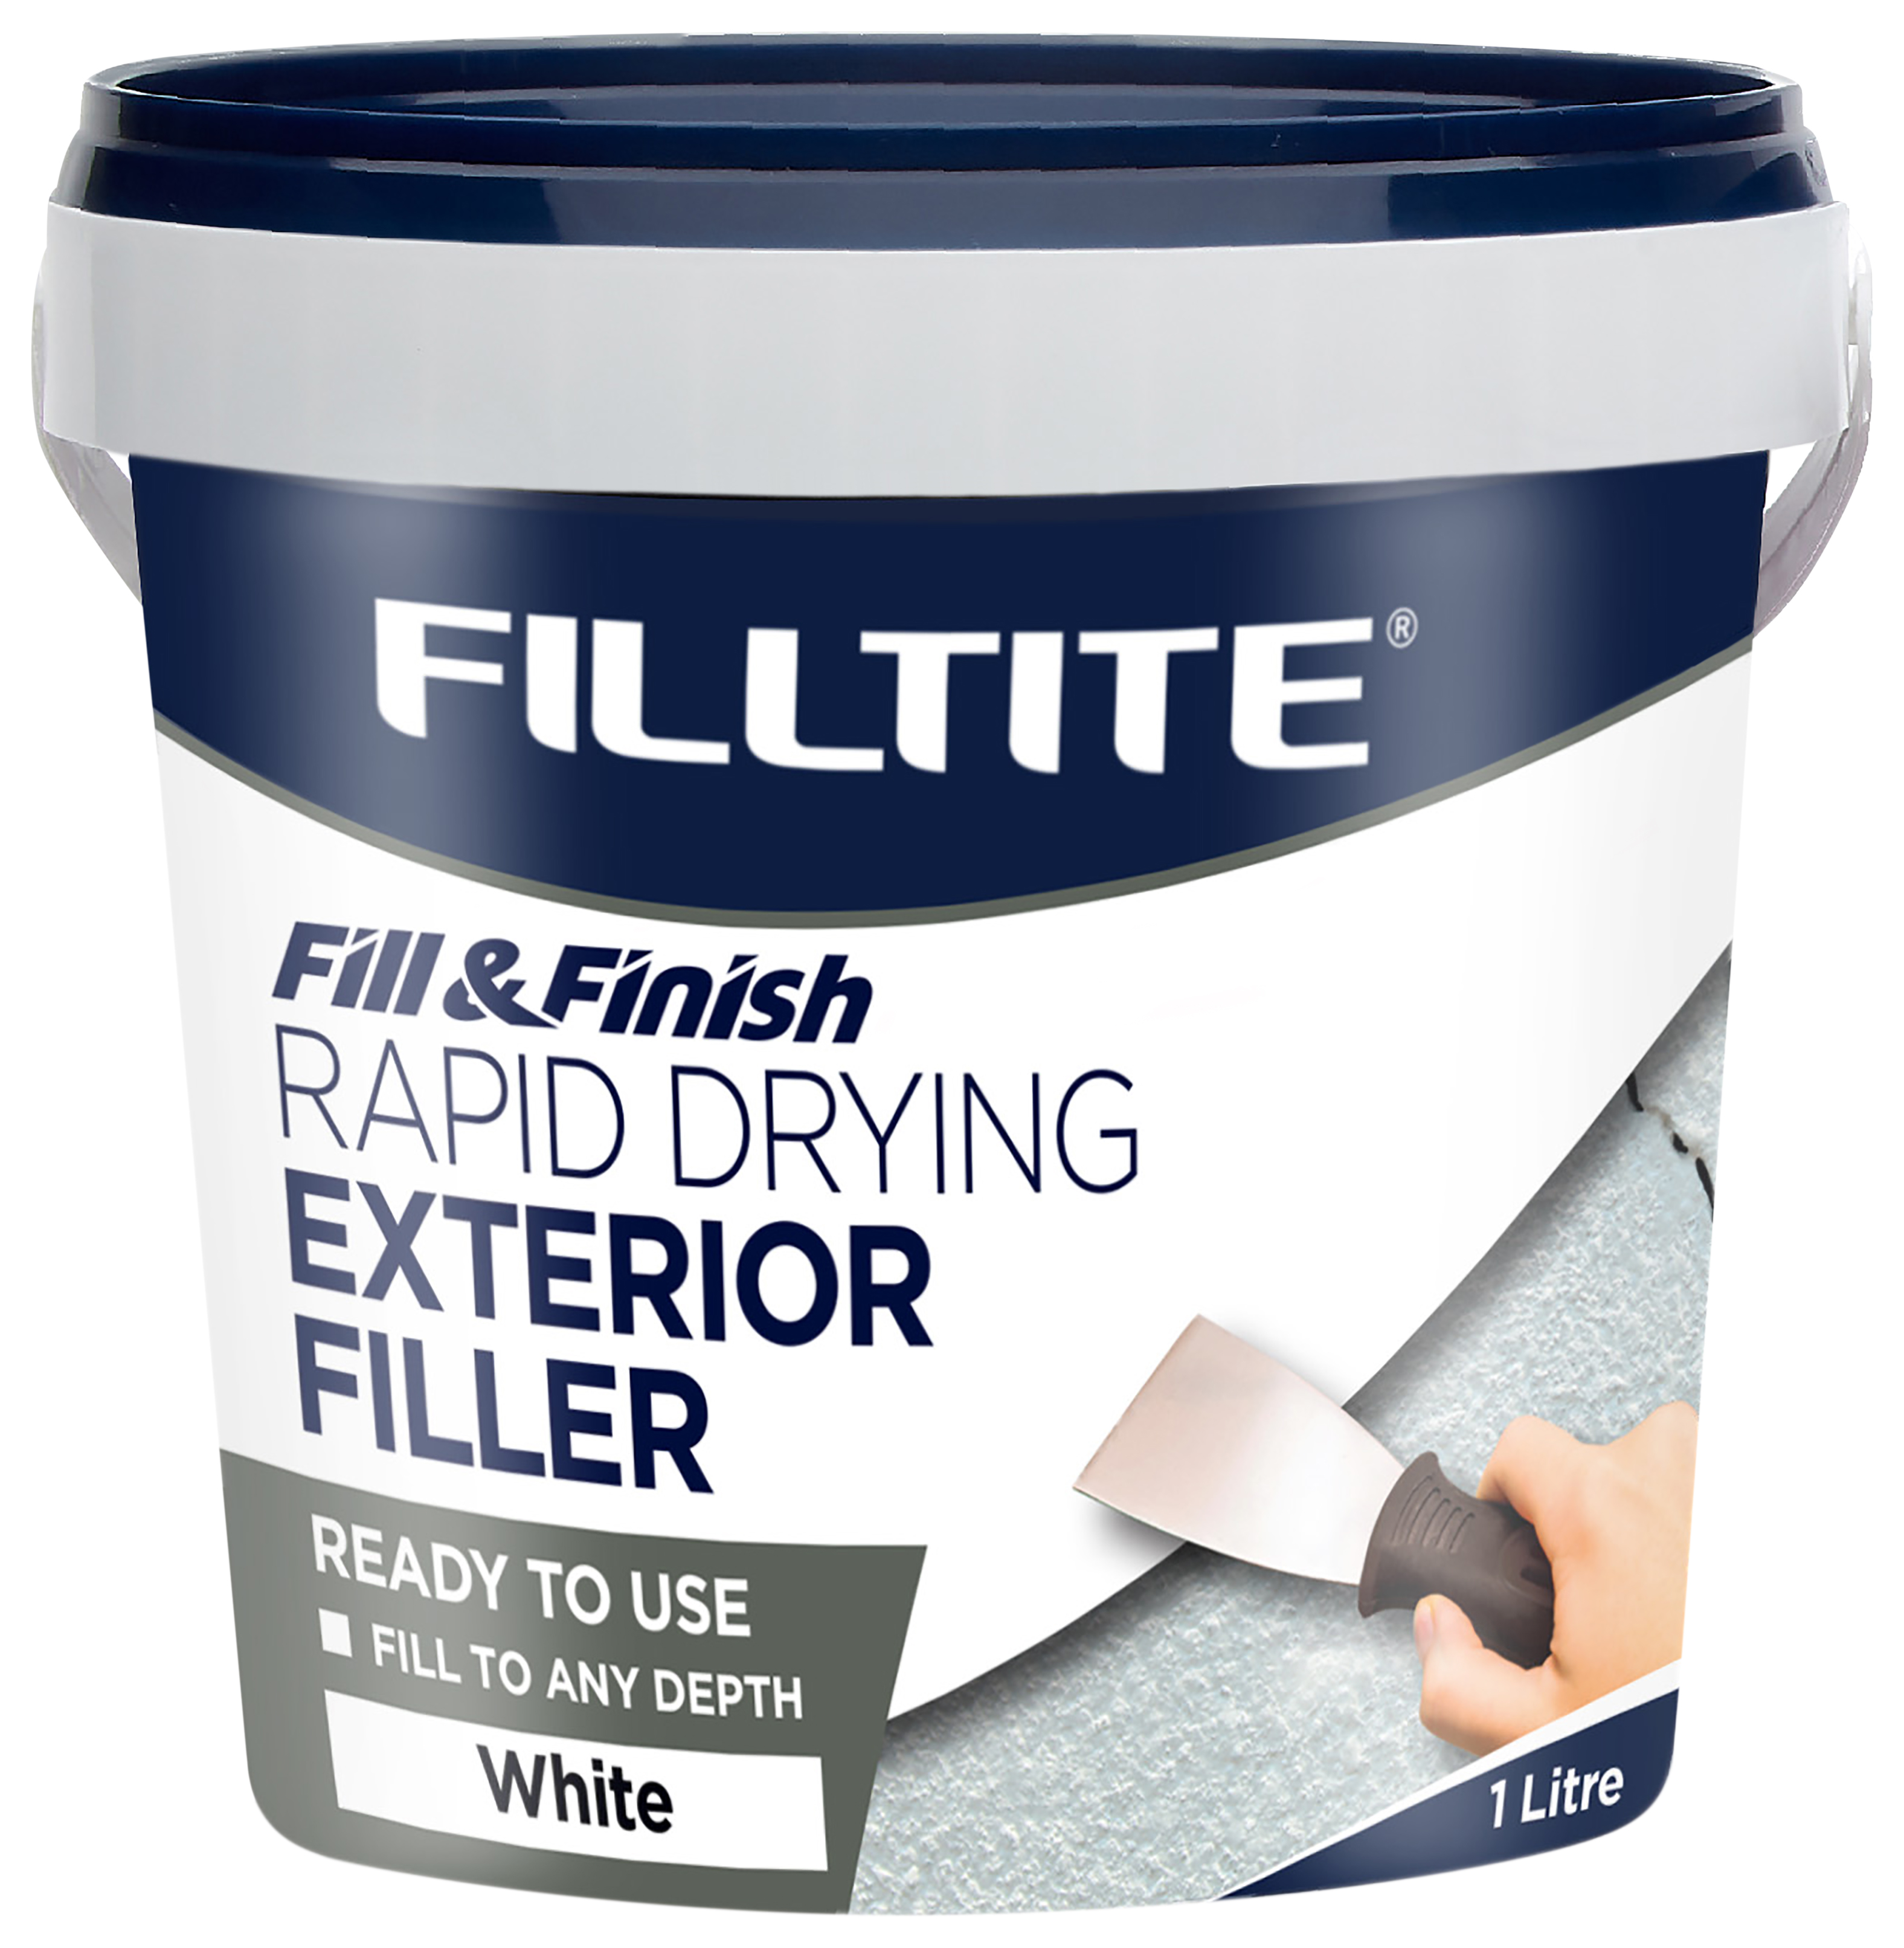 Filltite Rapid Drying Exterior Filler - 1L